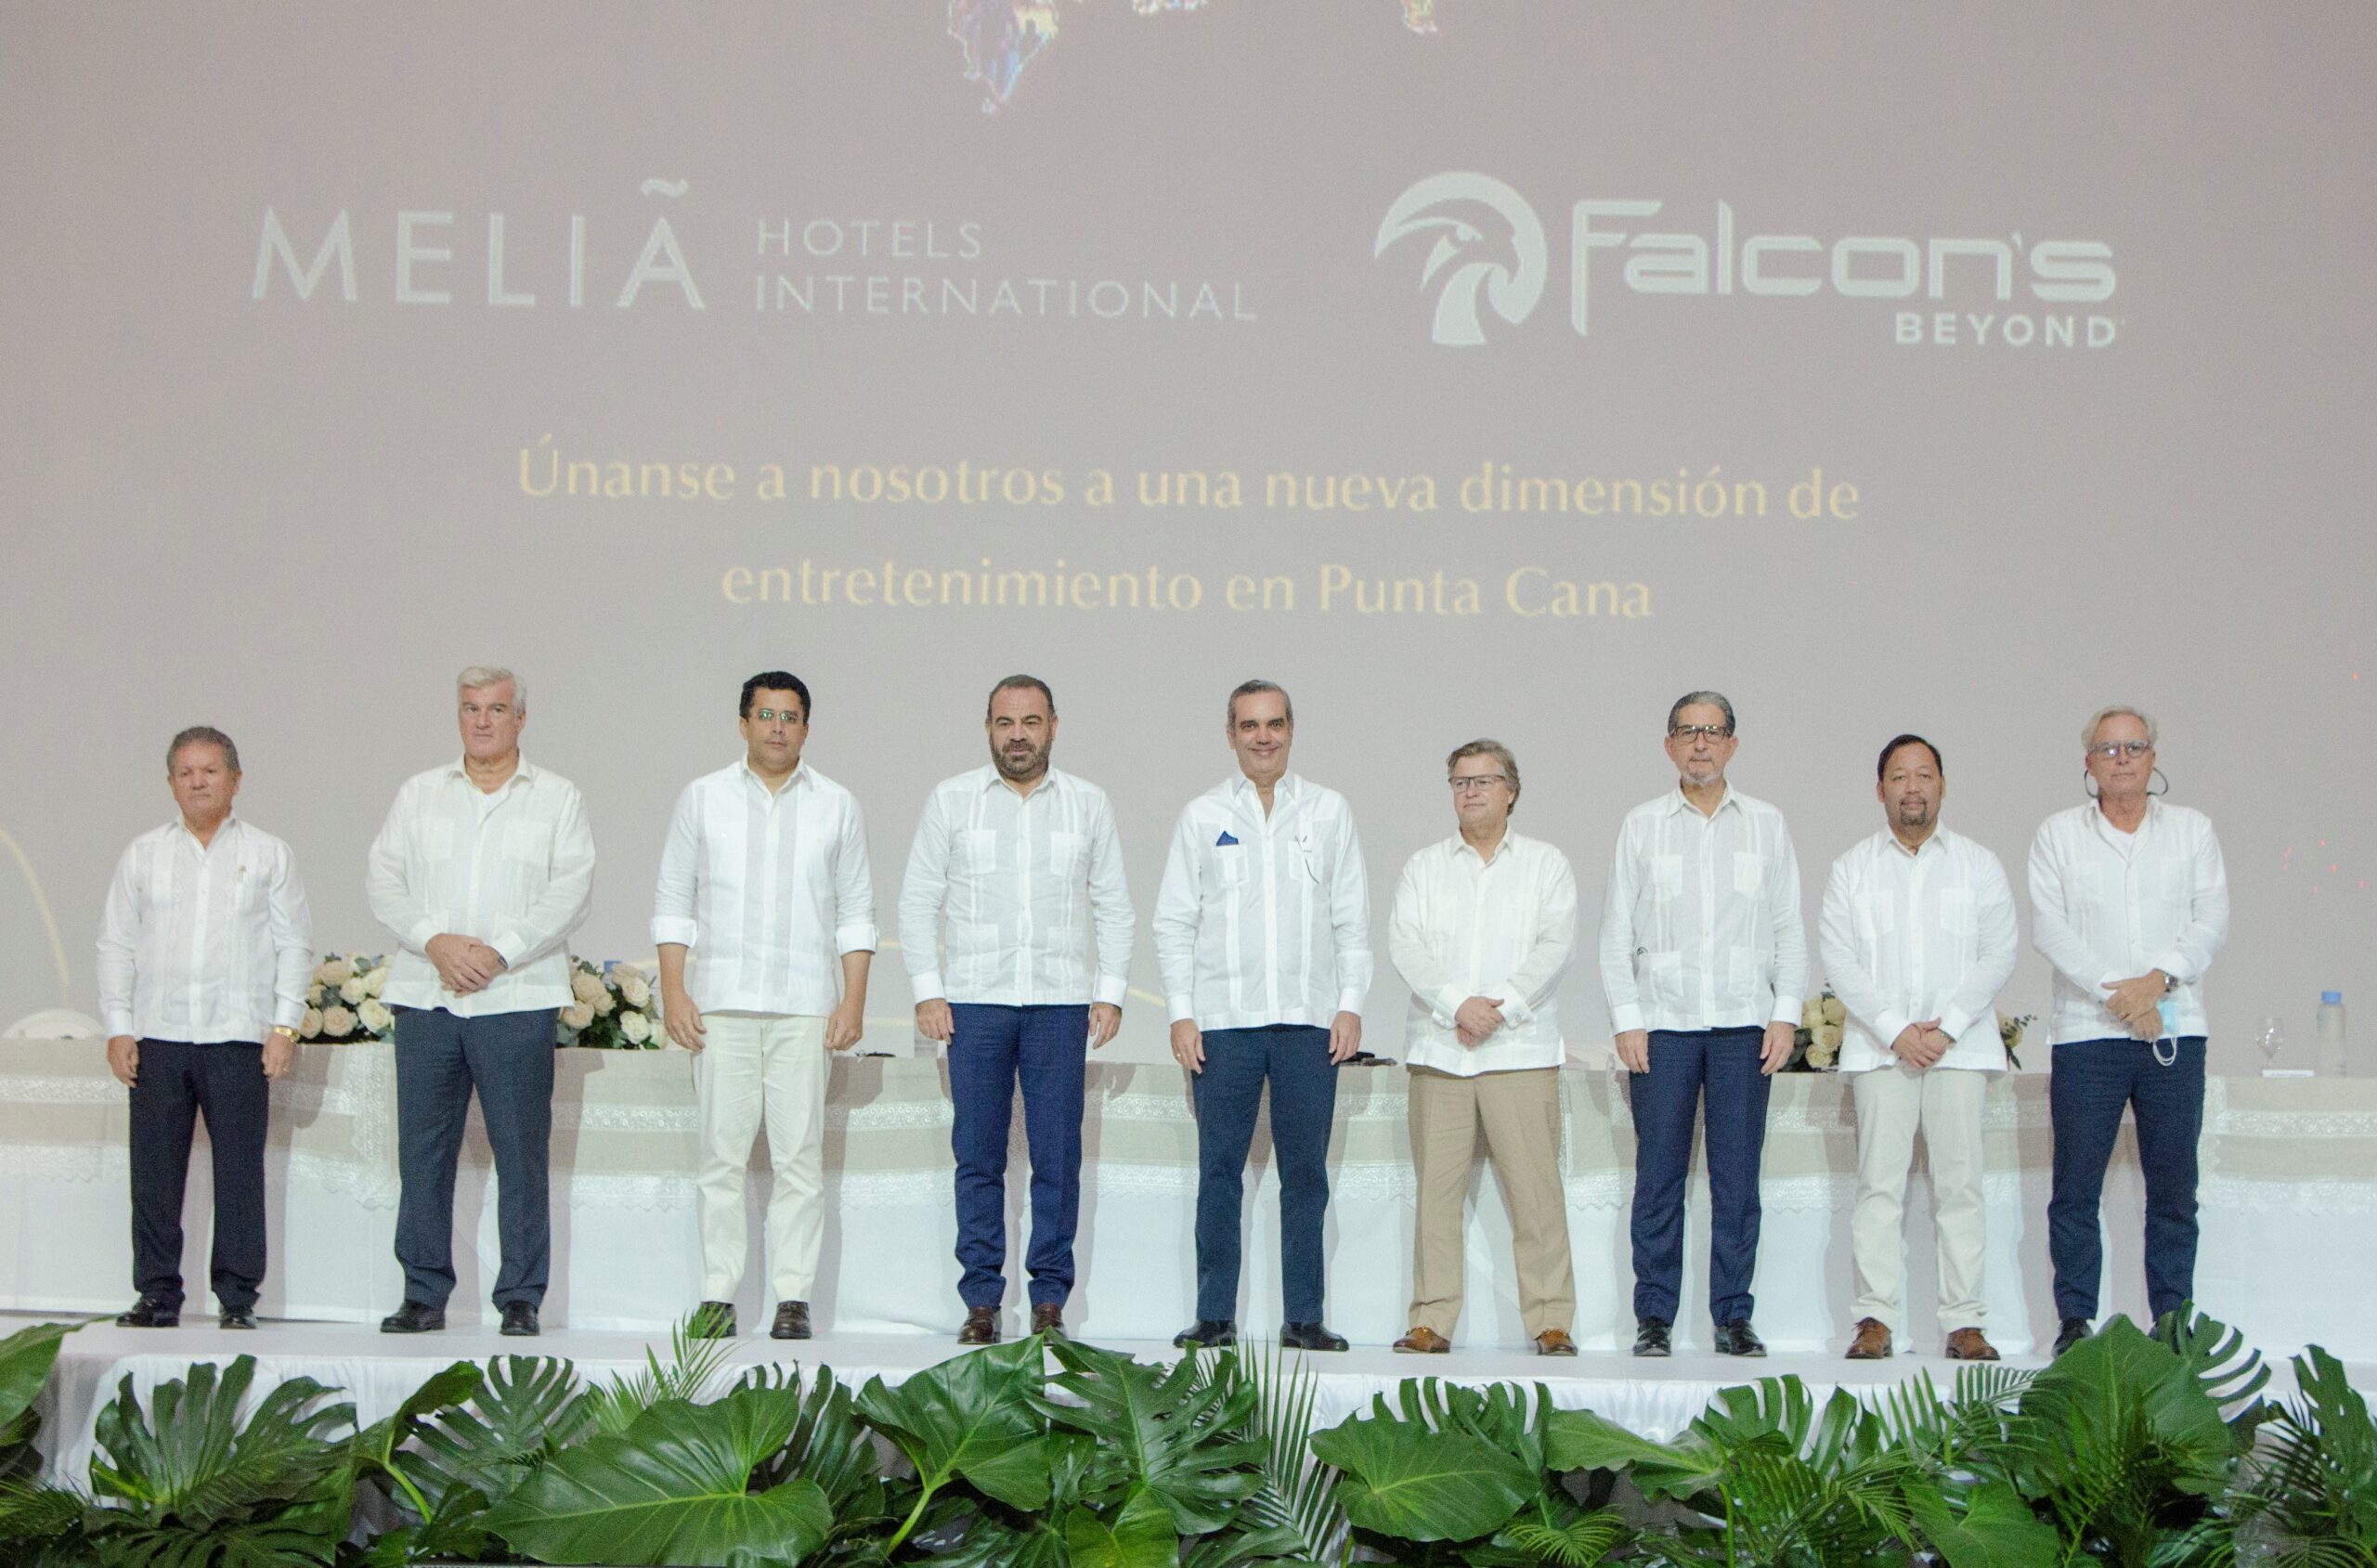 Falcon’s and Meliá announce $350 million entertainment destination in Punta Cana